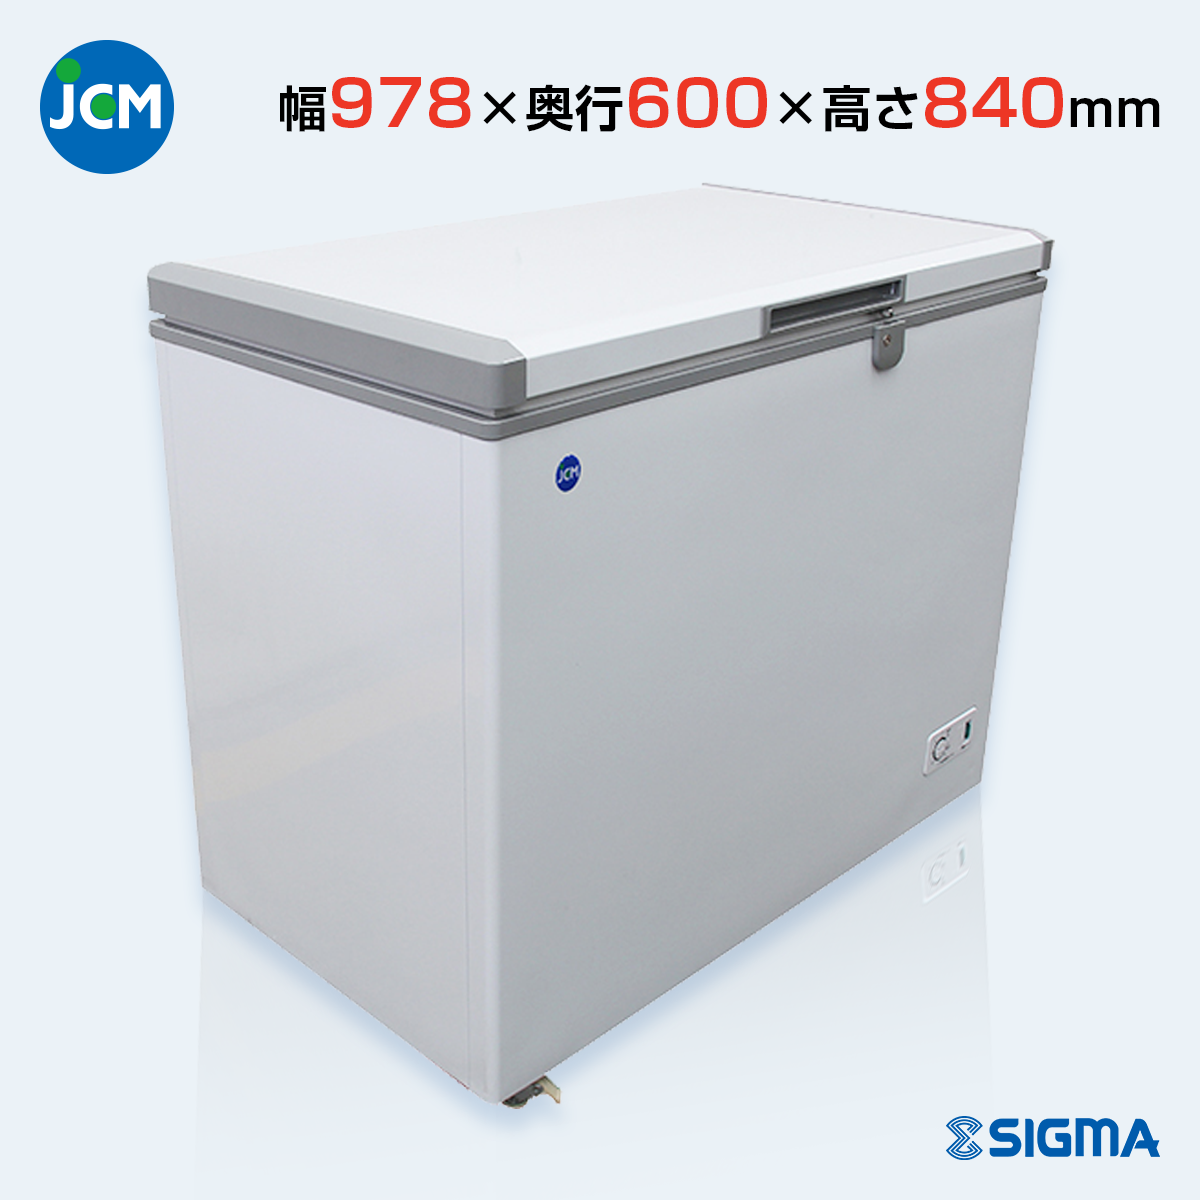 JCMC-206 冷凍ストッカー／幅978×奥行600×高さ840mm